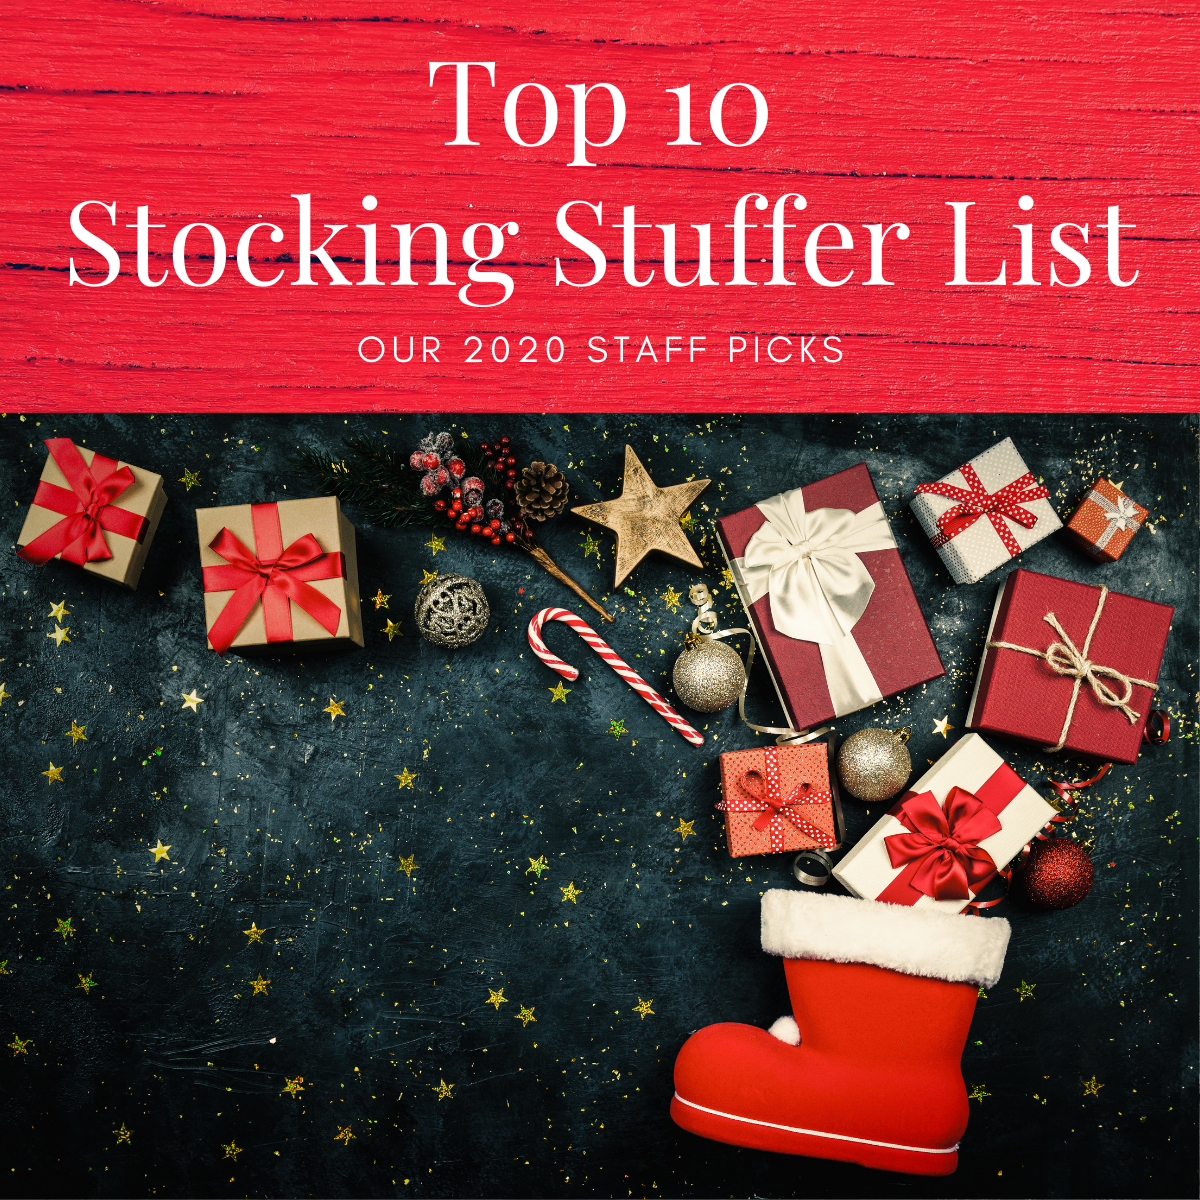 Top 10 Stocking Stuffer List